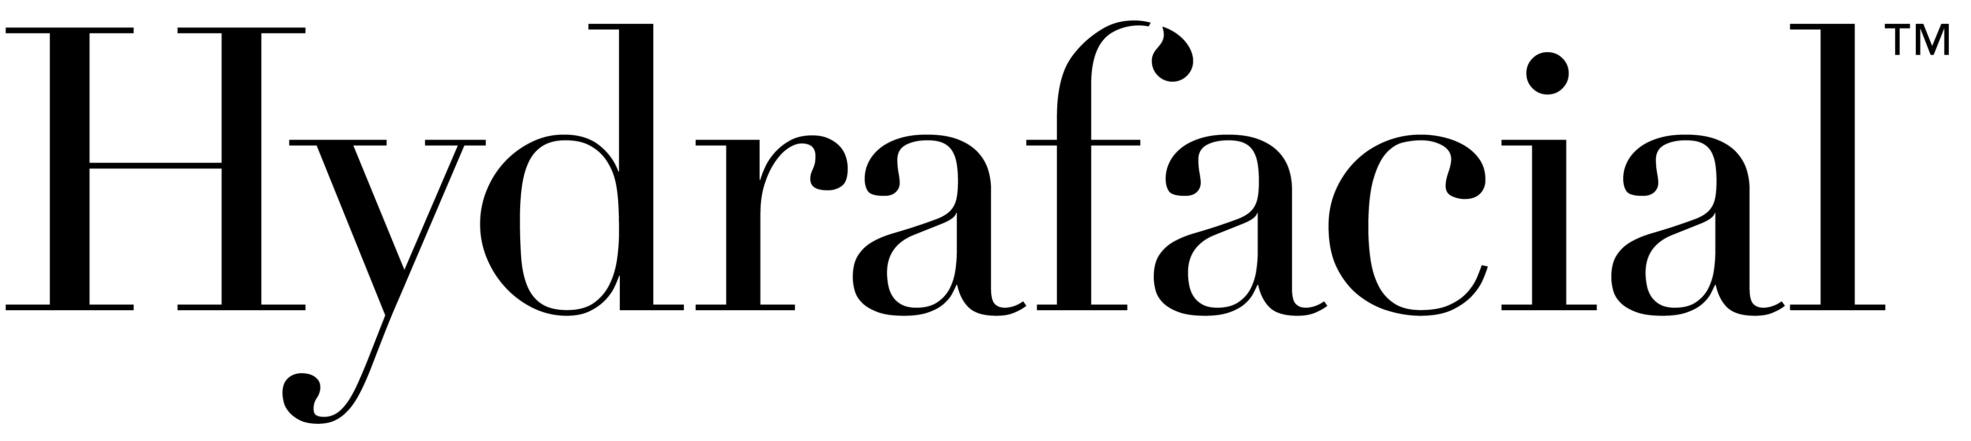 Hydrafacial TM Logo: this image has no function